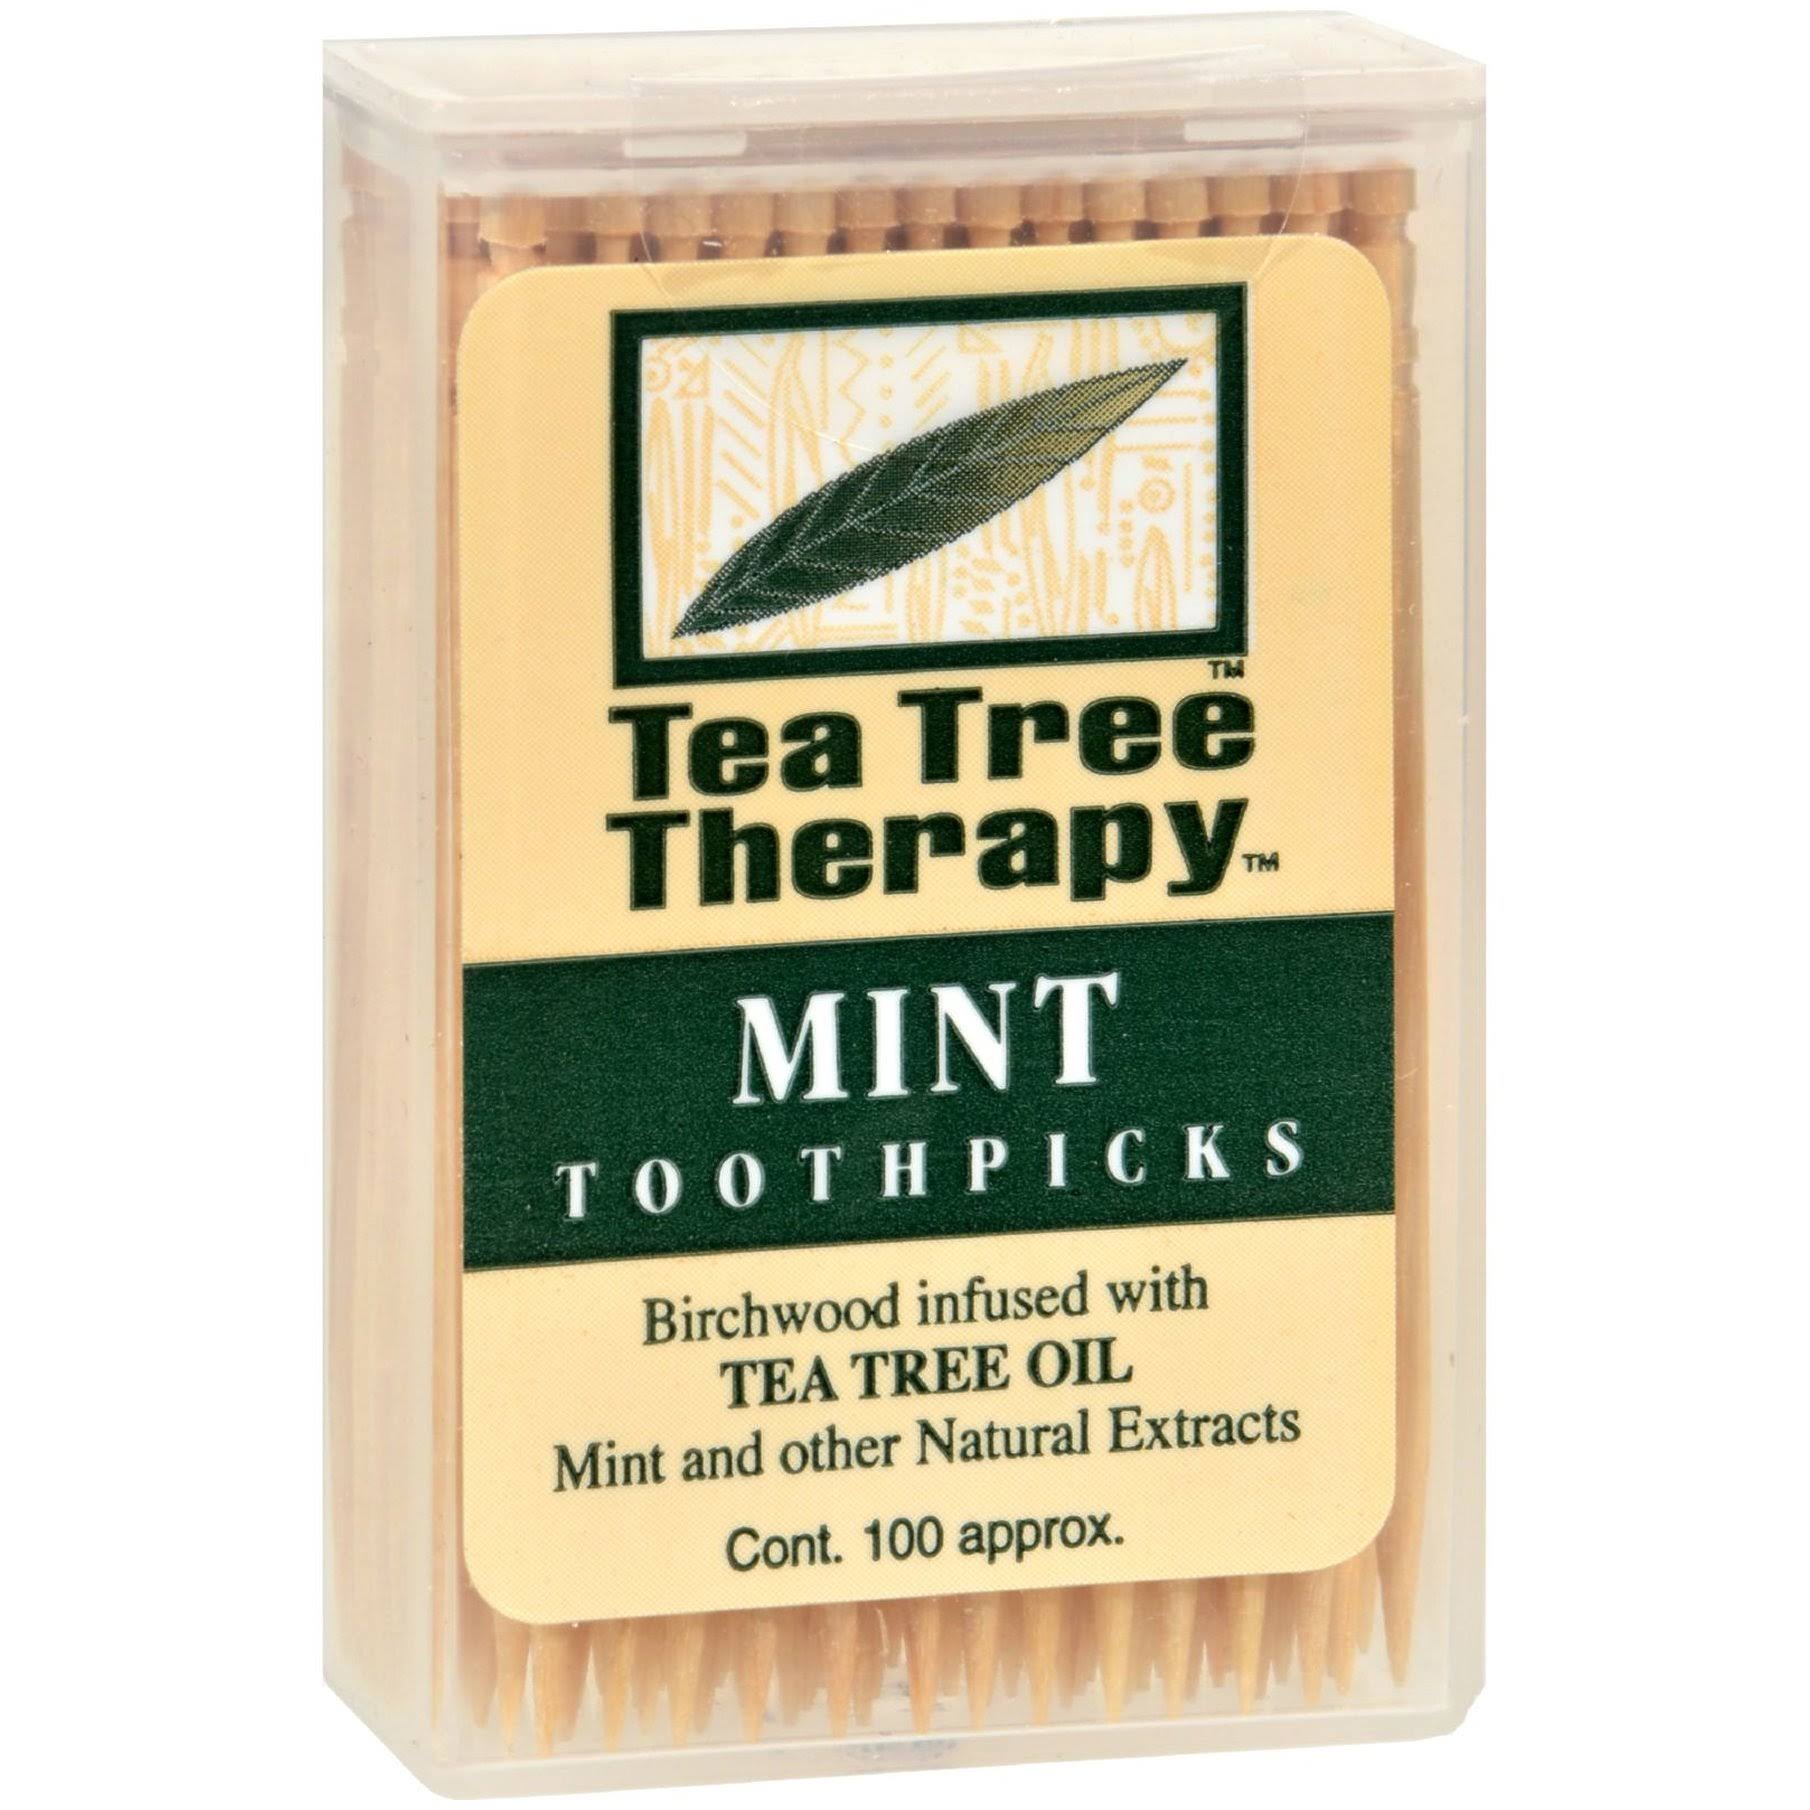 Tea Tree Therapy Toothpicks - 100 Piece